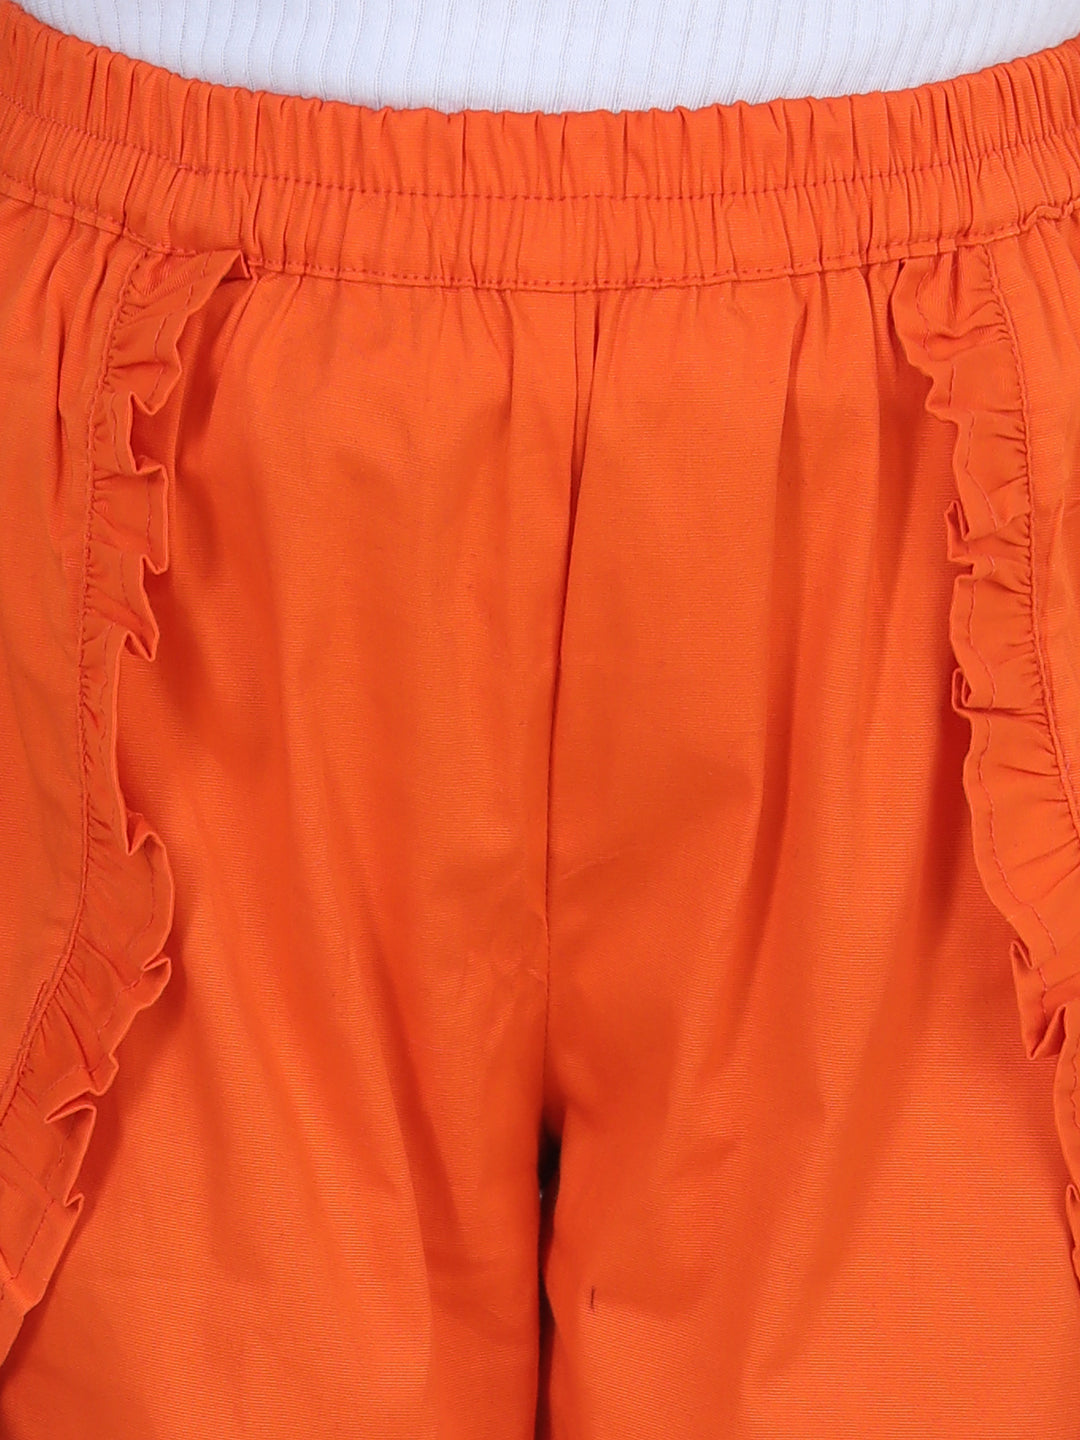 Cutiekins Solid Cotton Lycra Shorts For Girls - Orange